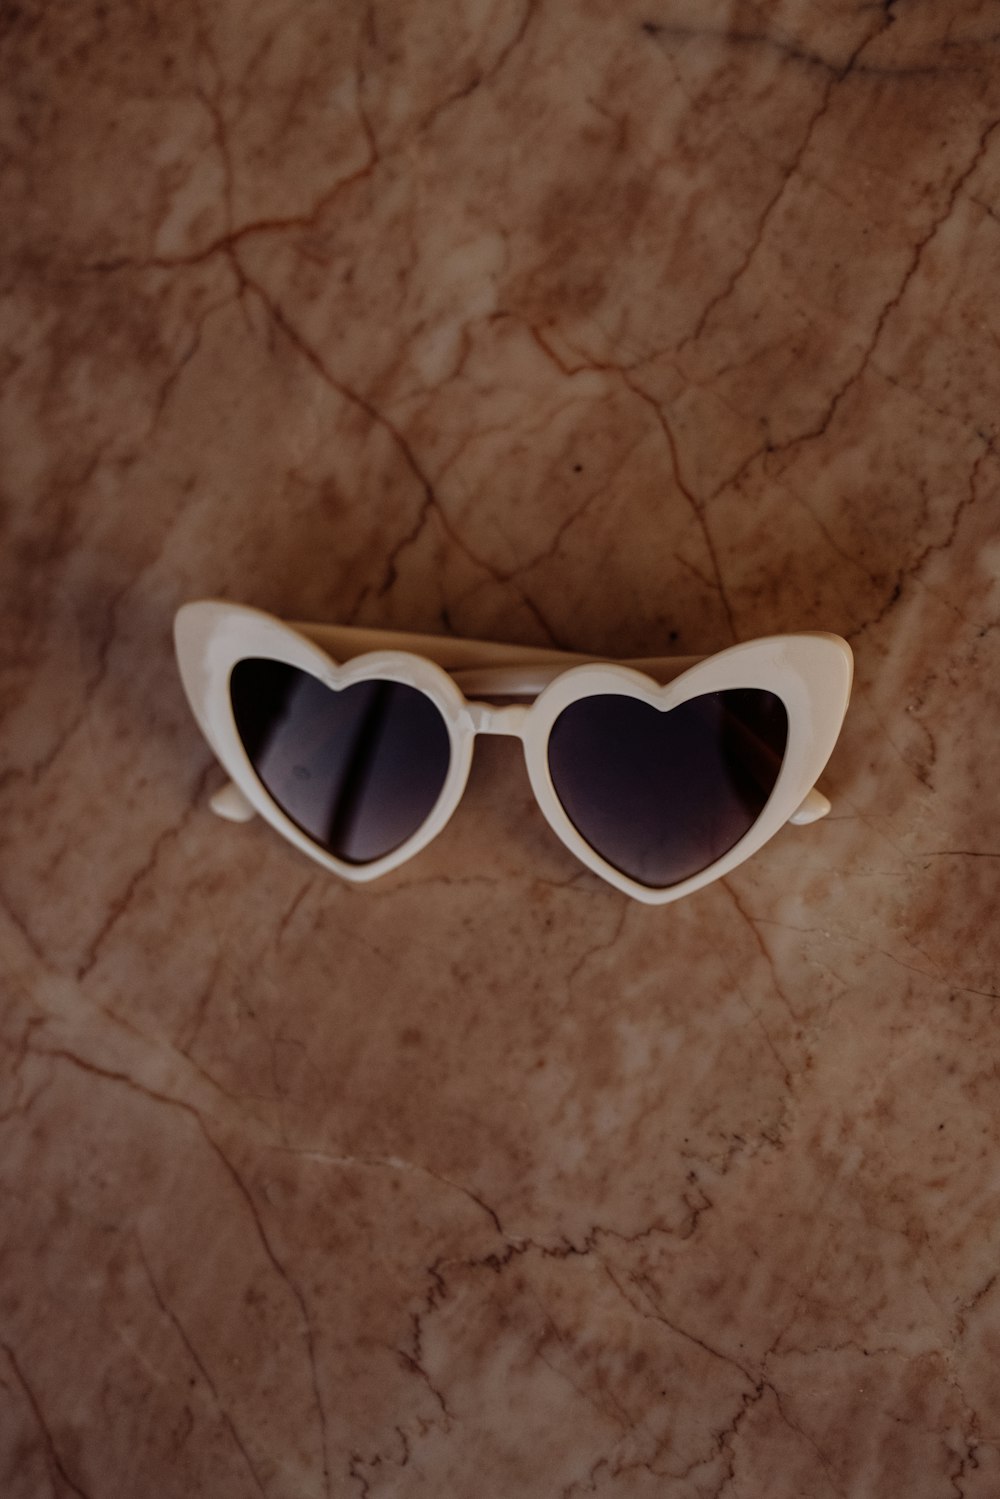 white framed sunglasses on brown surface